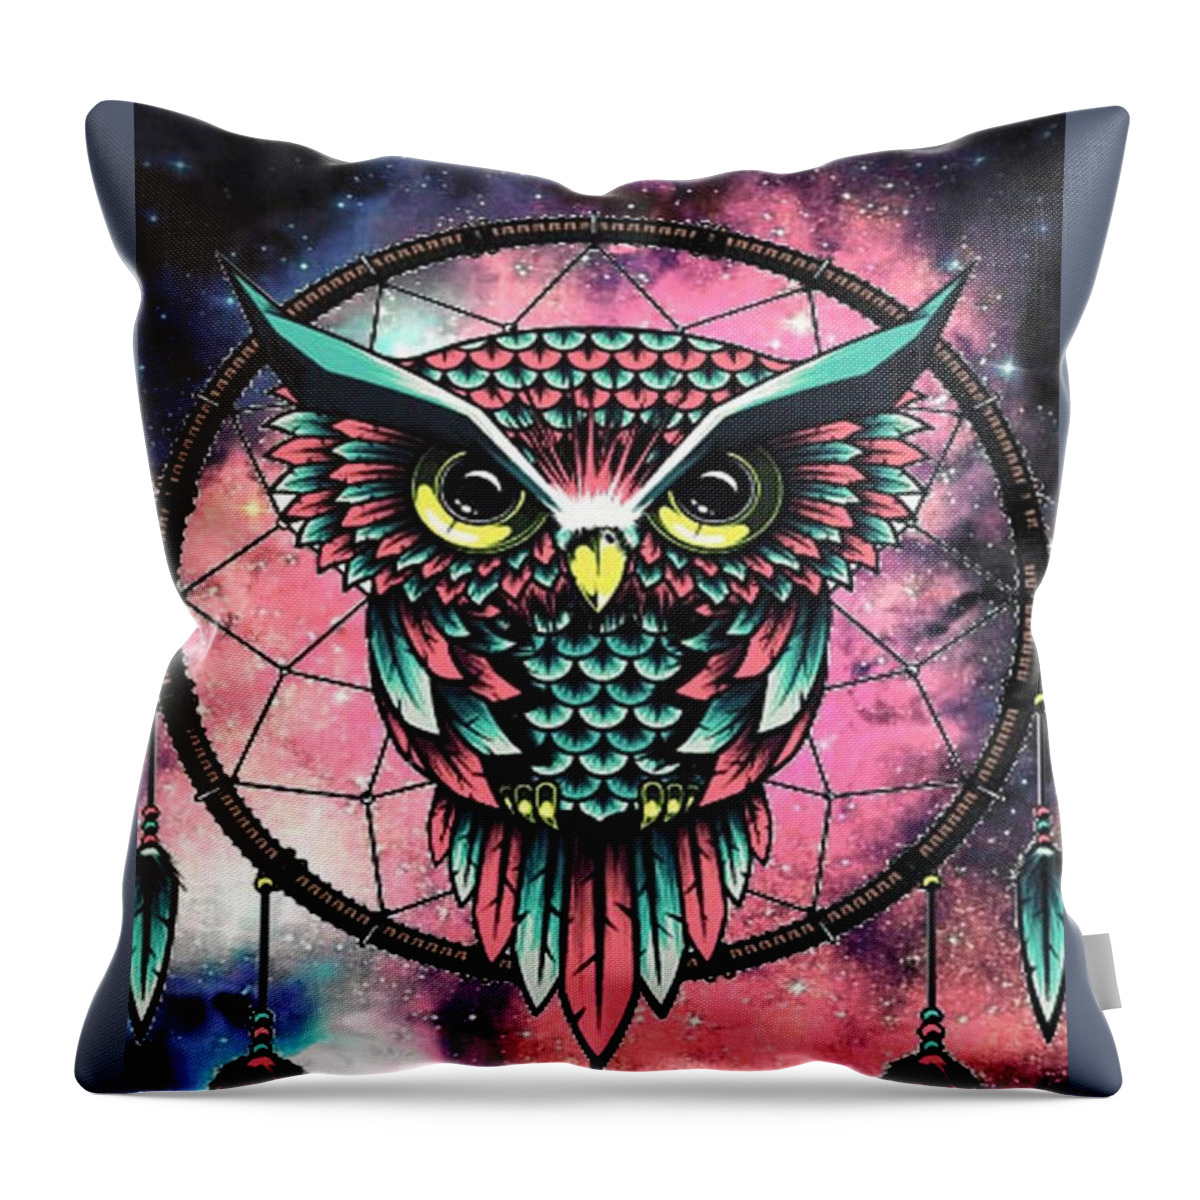 Dreamcatcher Throw Pillow featuring the digital art Owl dreamcatcher by Mopssy Stopsy